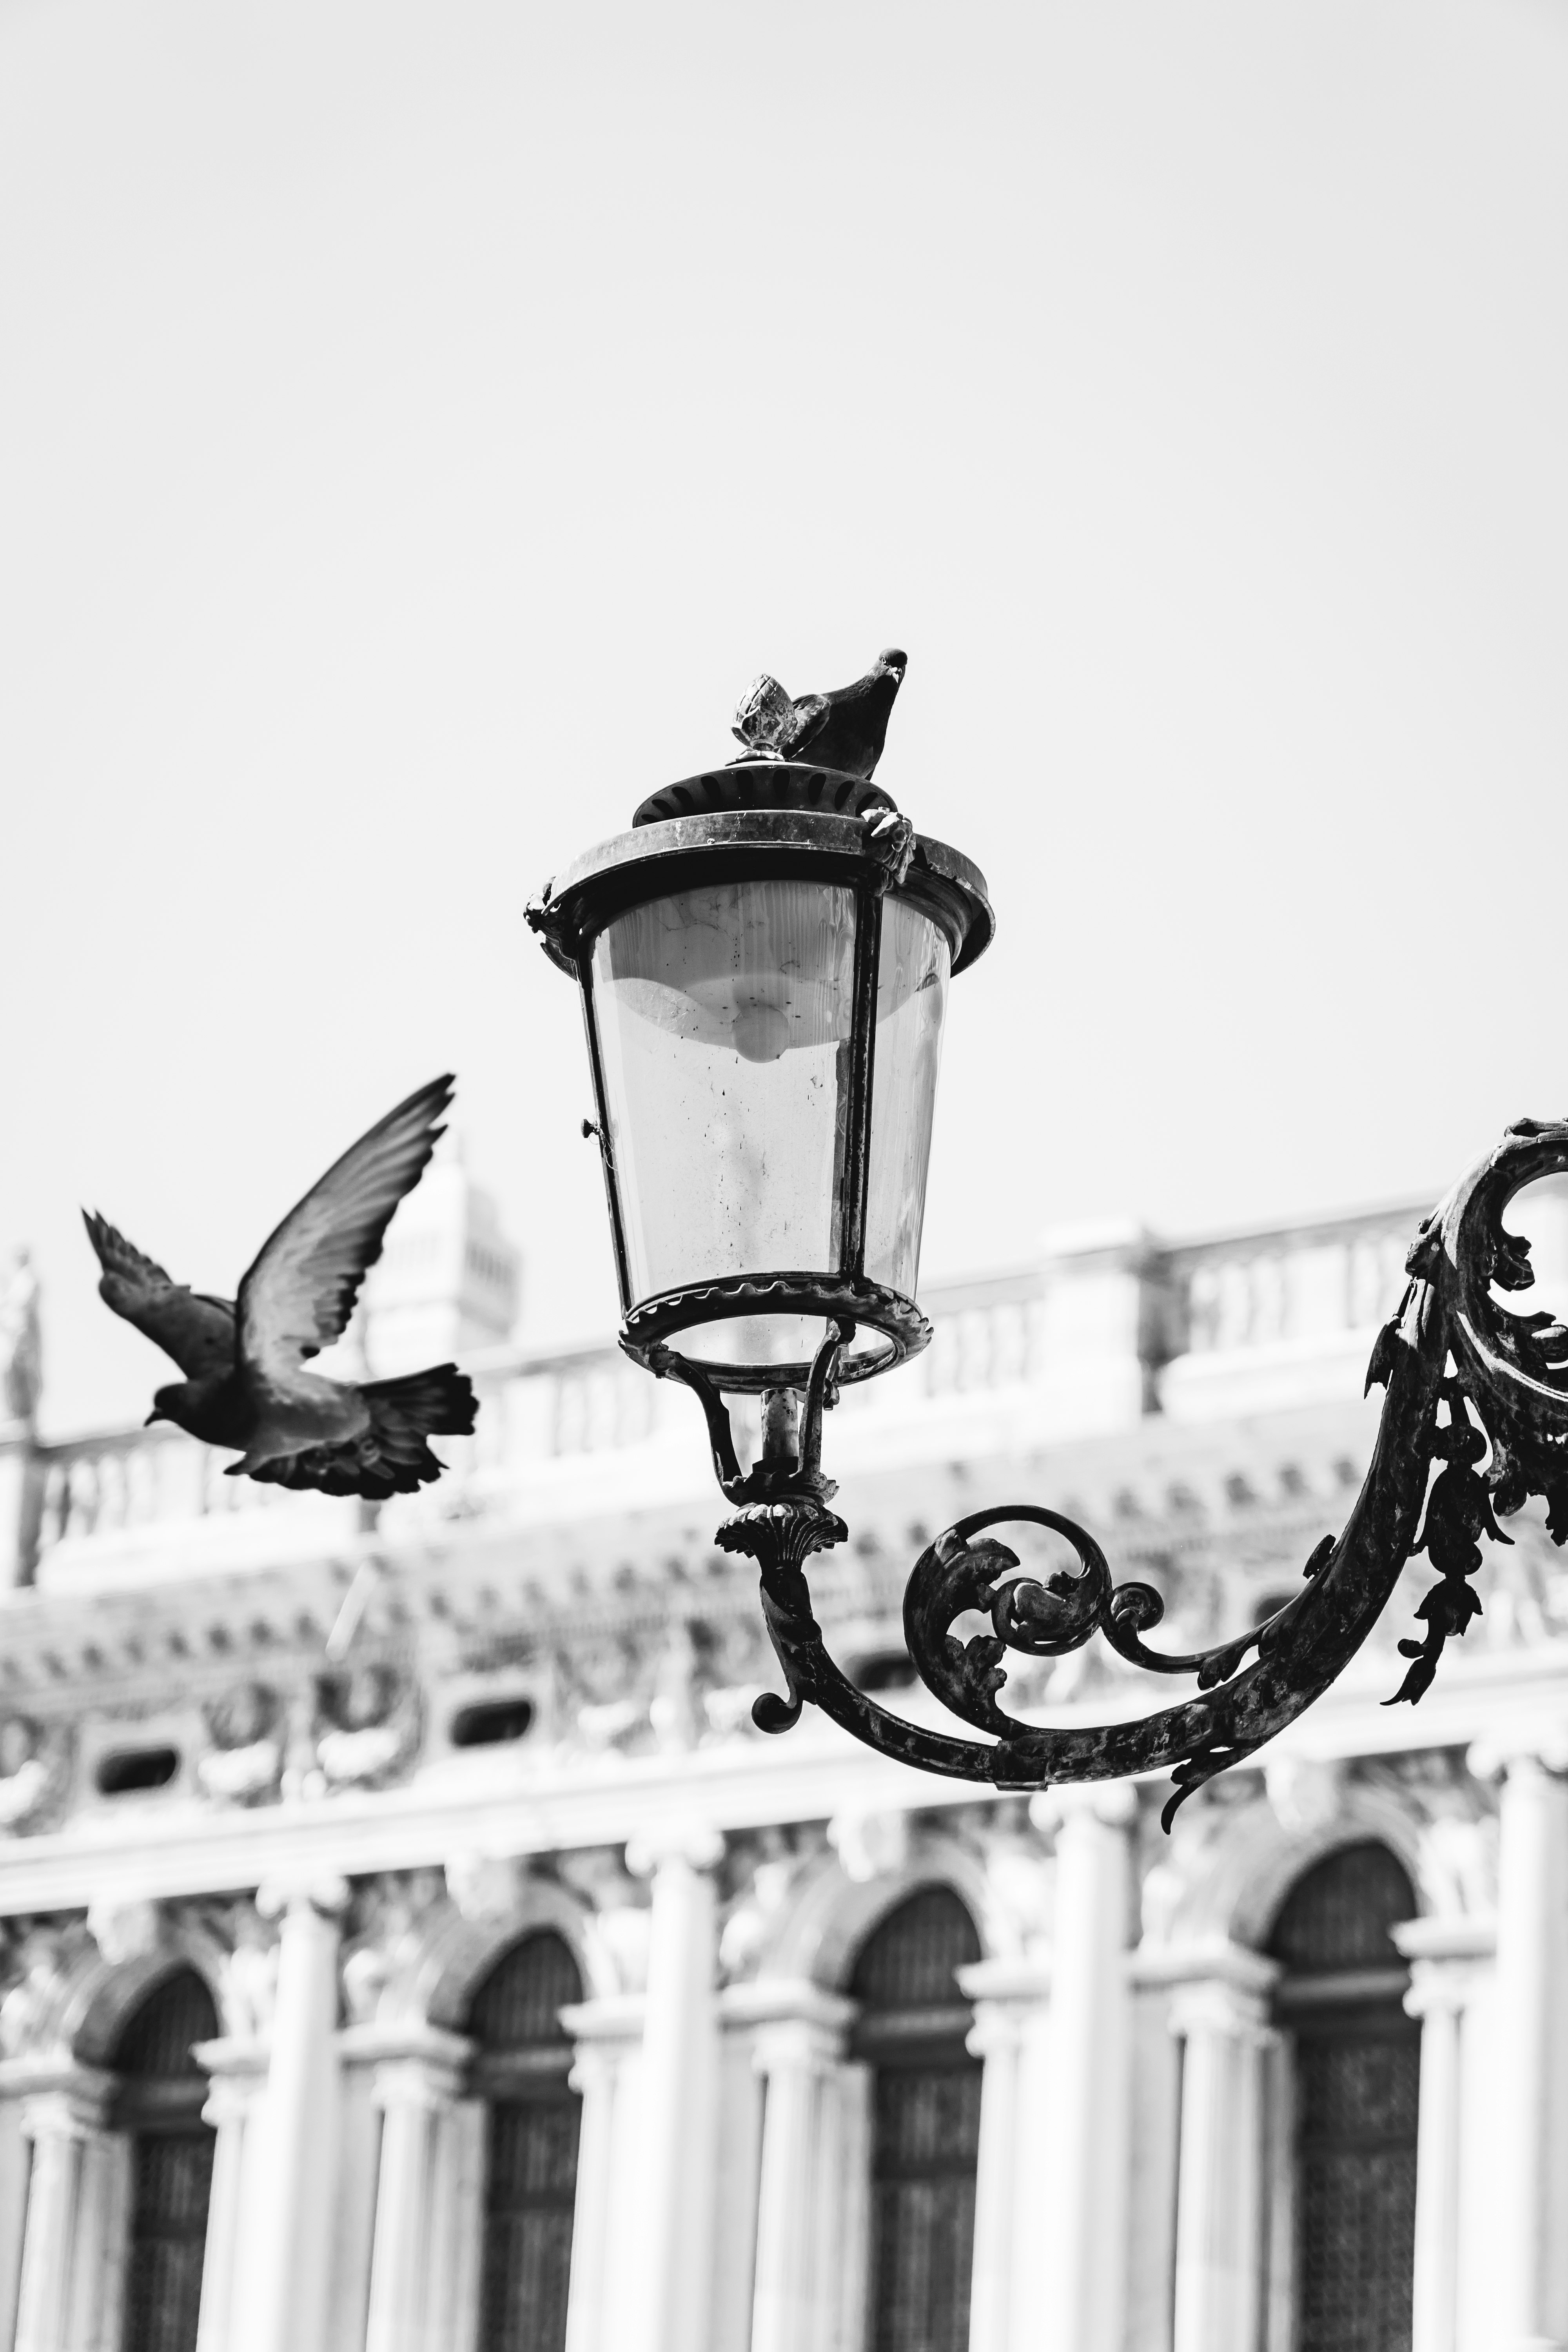 grayscale photo of bird on black metal lamp post